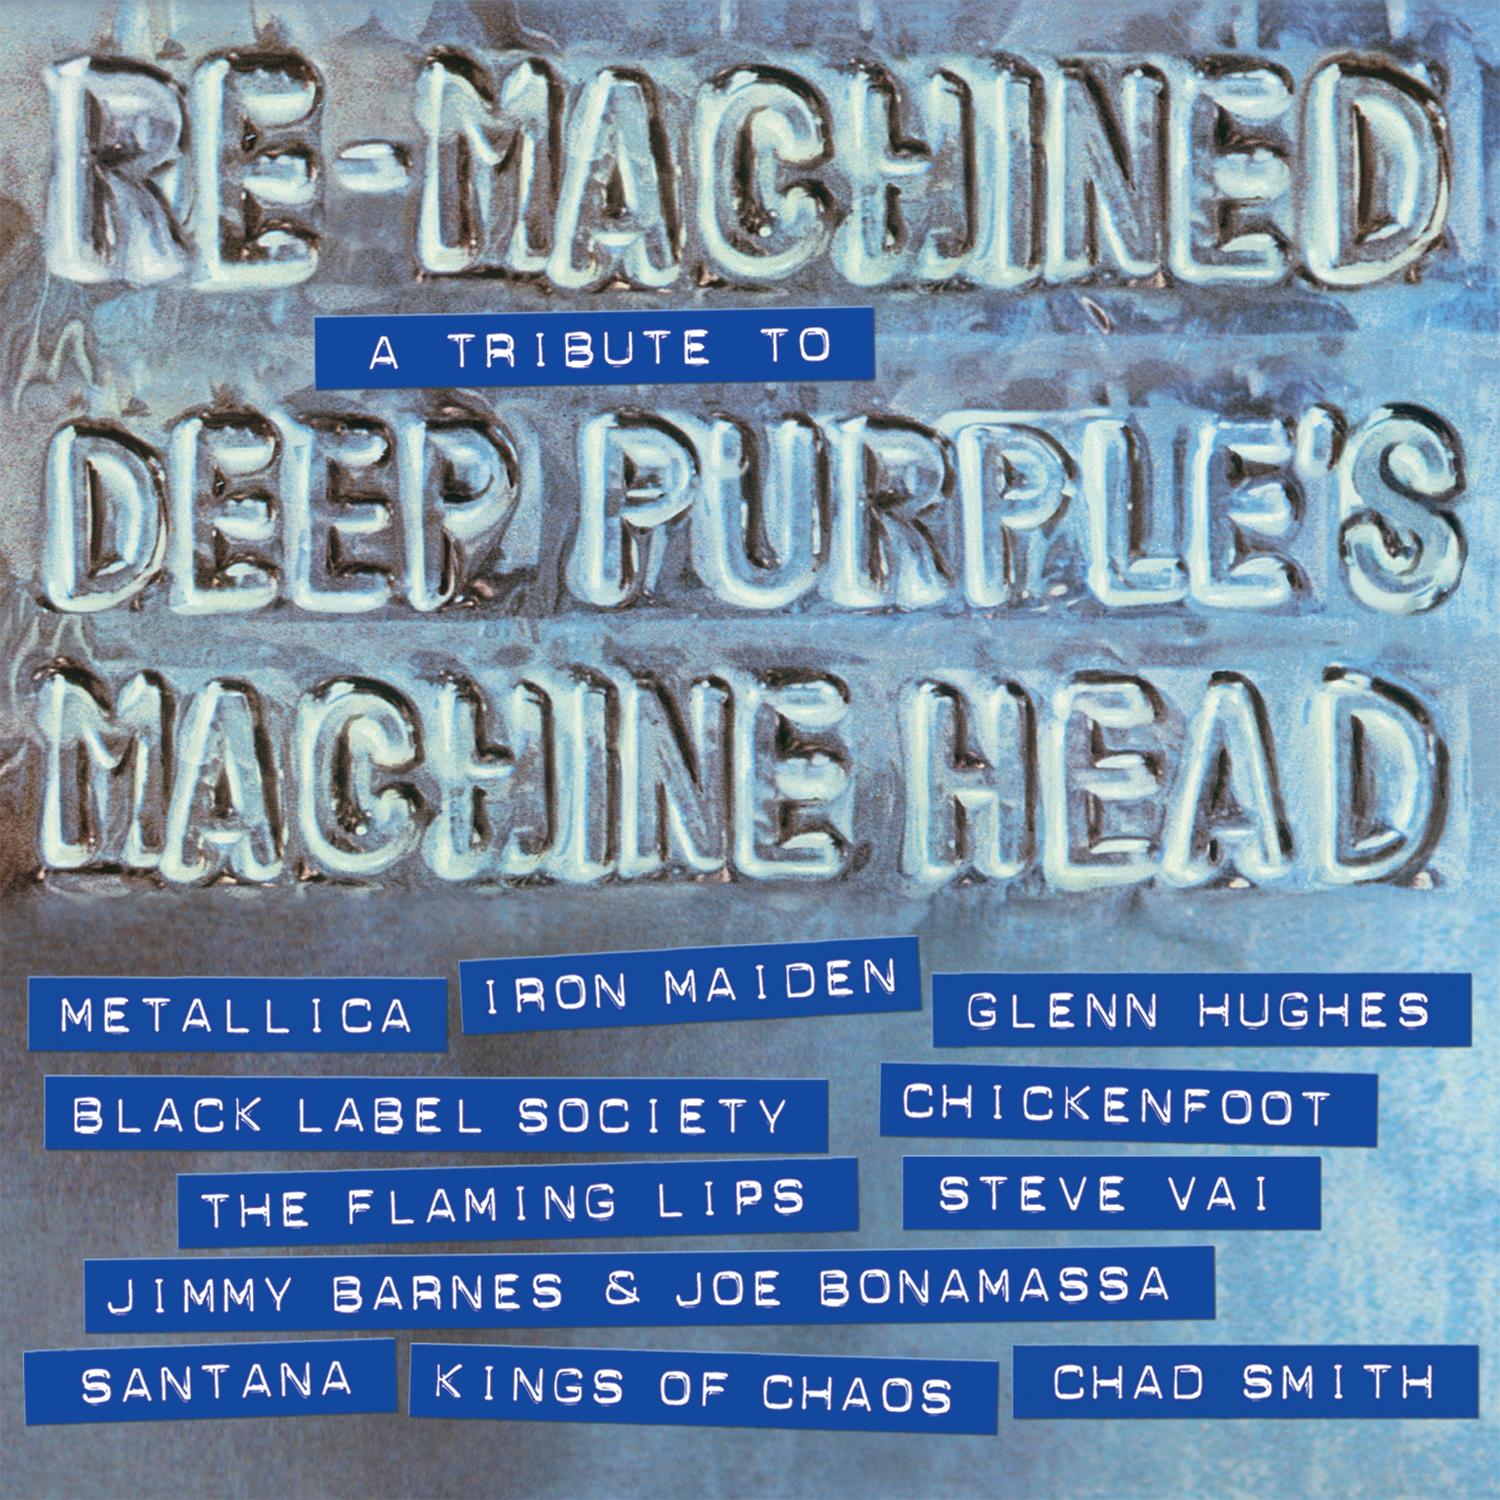 Re-Machined: A Tribute to Deep Purple&#x27;s Machine Head